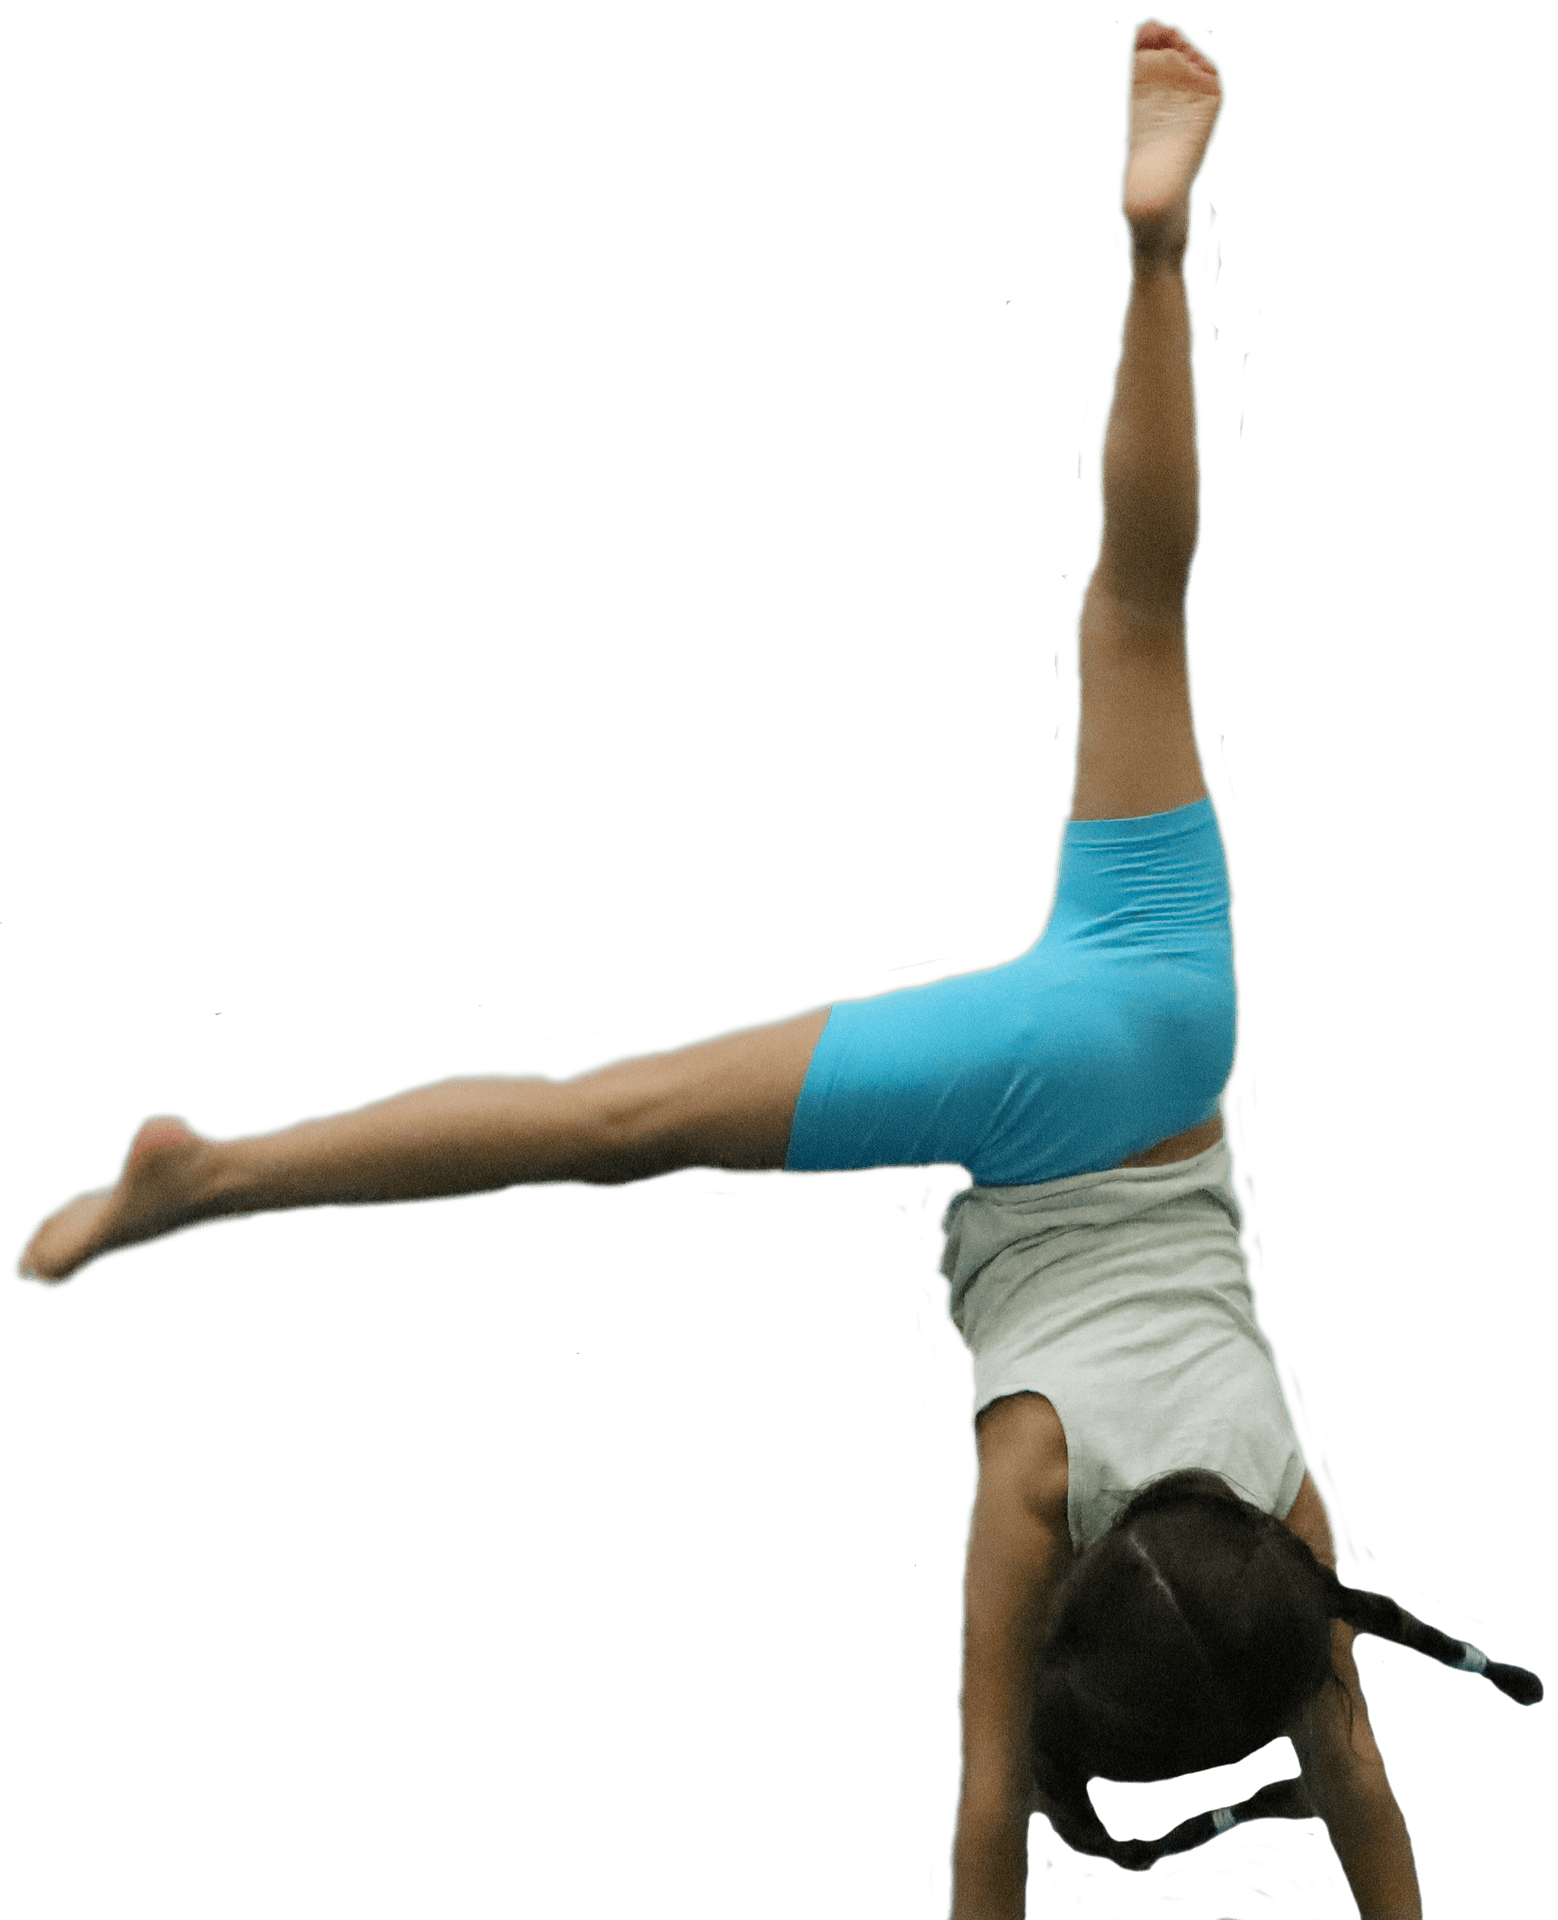 Zumba – fitness dance craze taking over the world | Jane Alexander